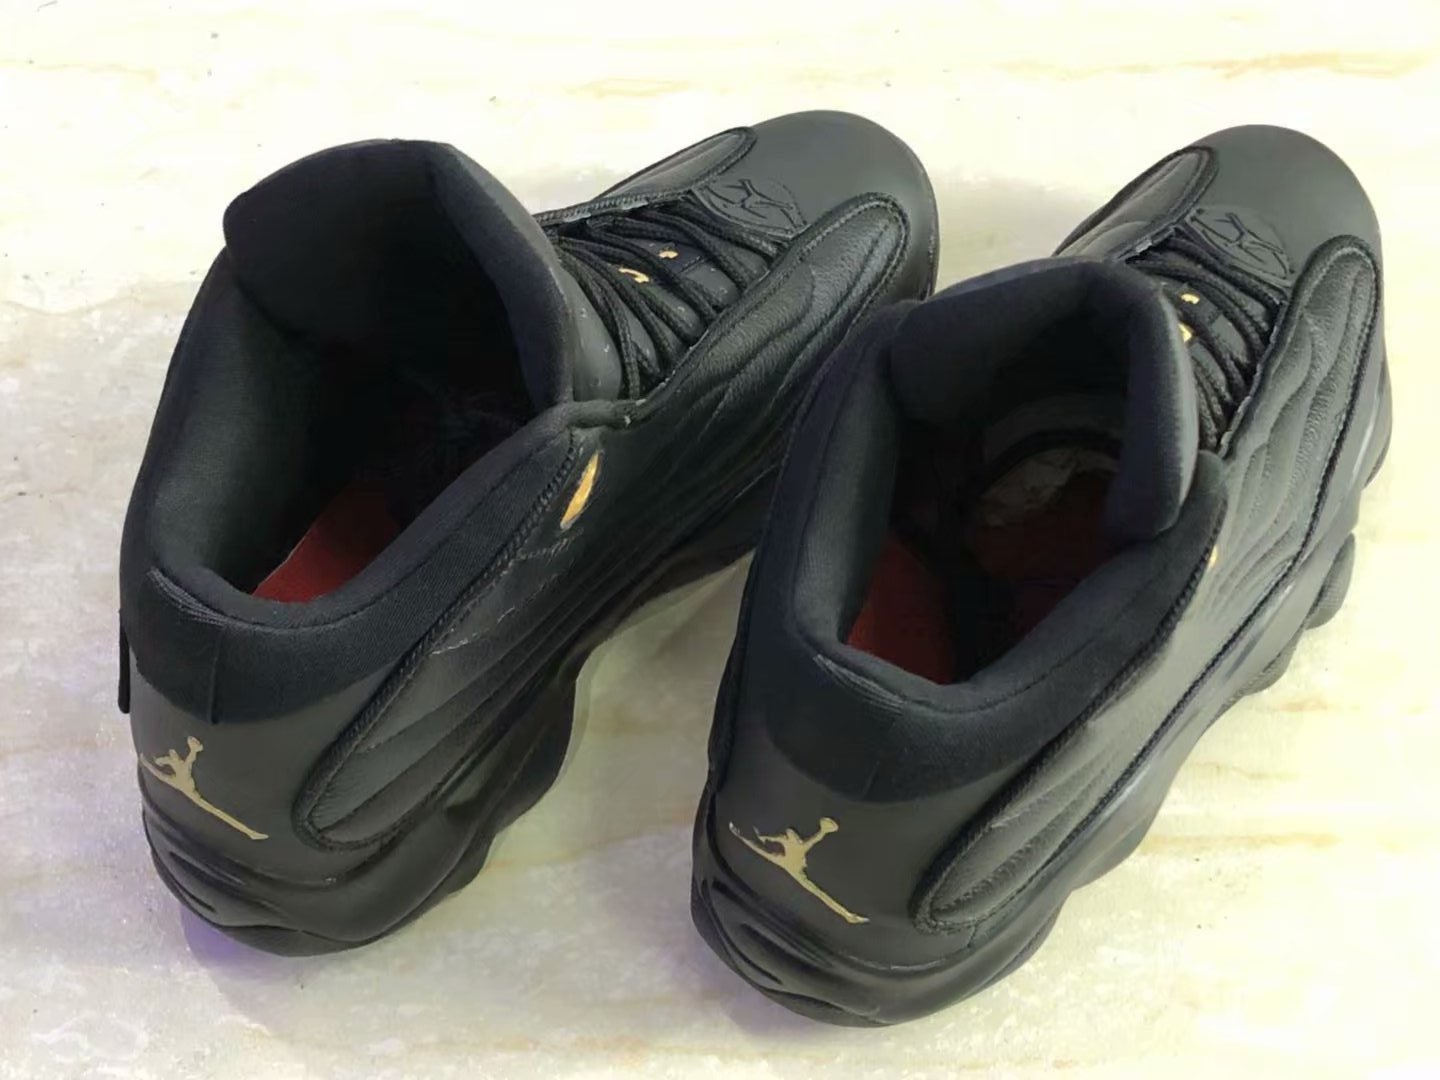 New Air Jordan 13.5 All Black Shoes - Click Image to Close